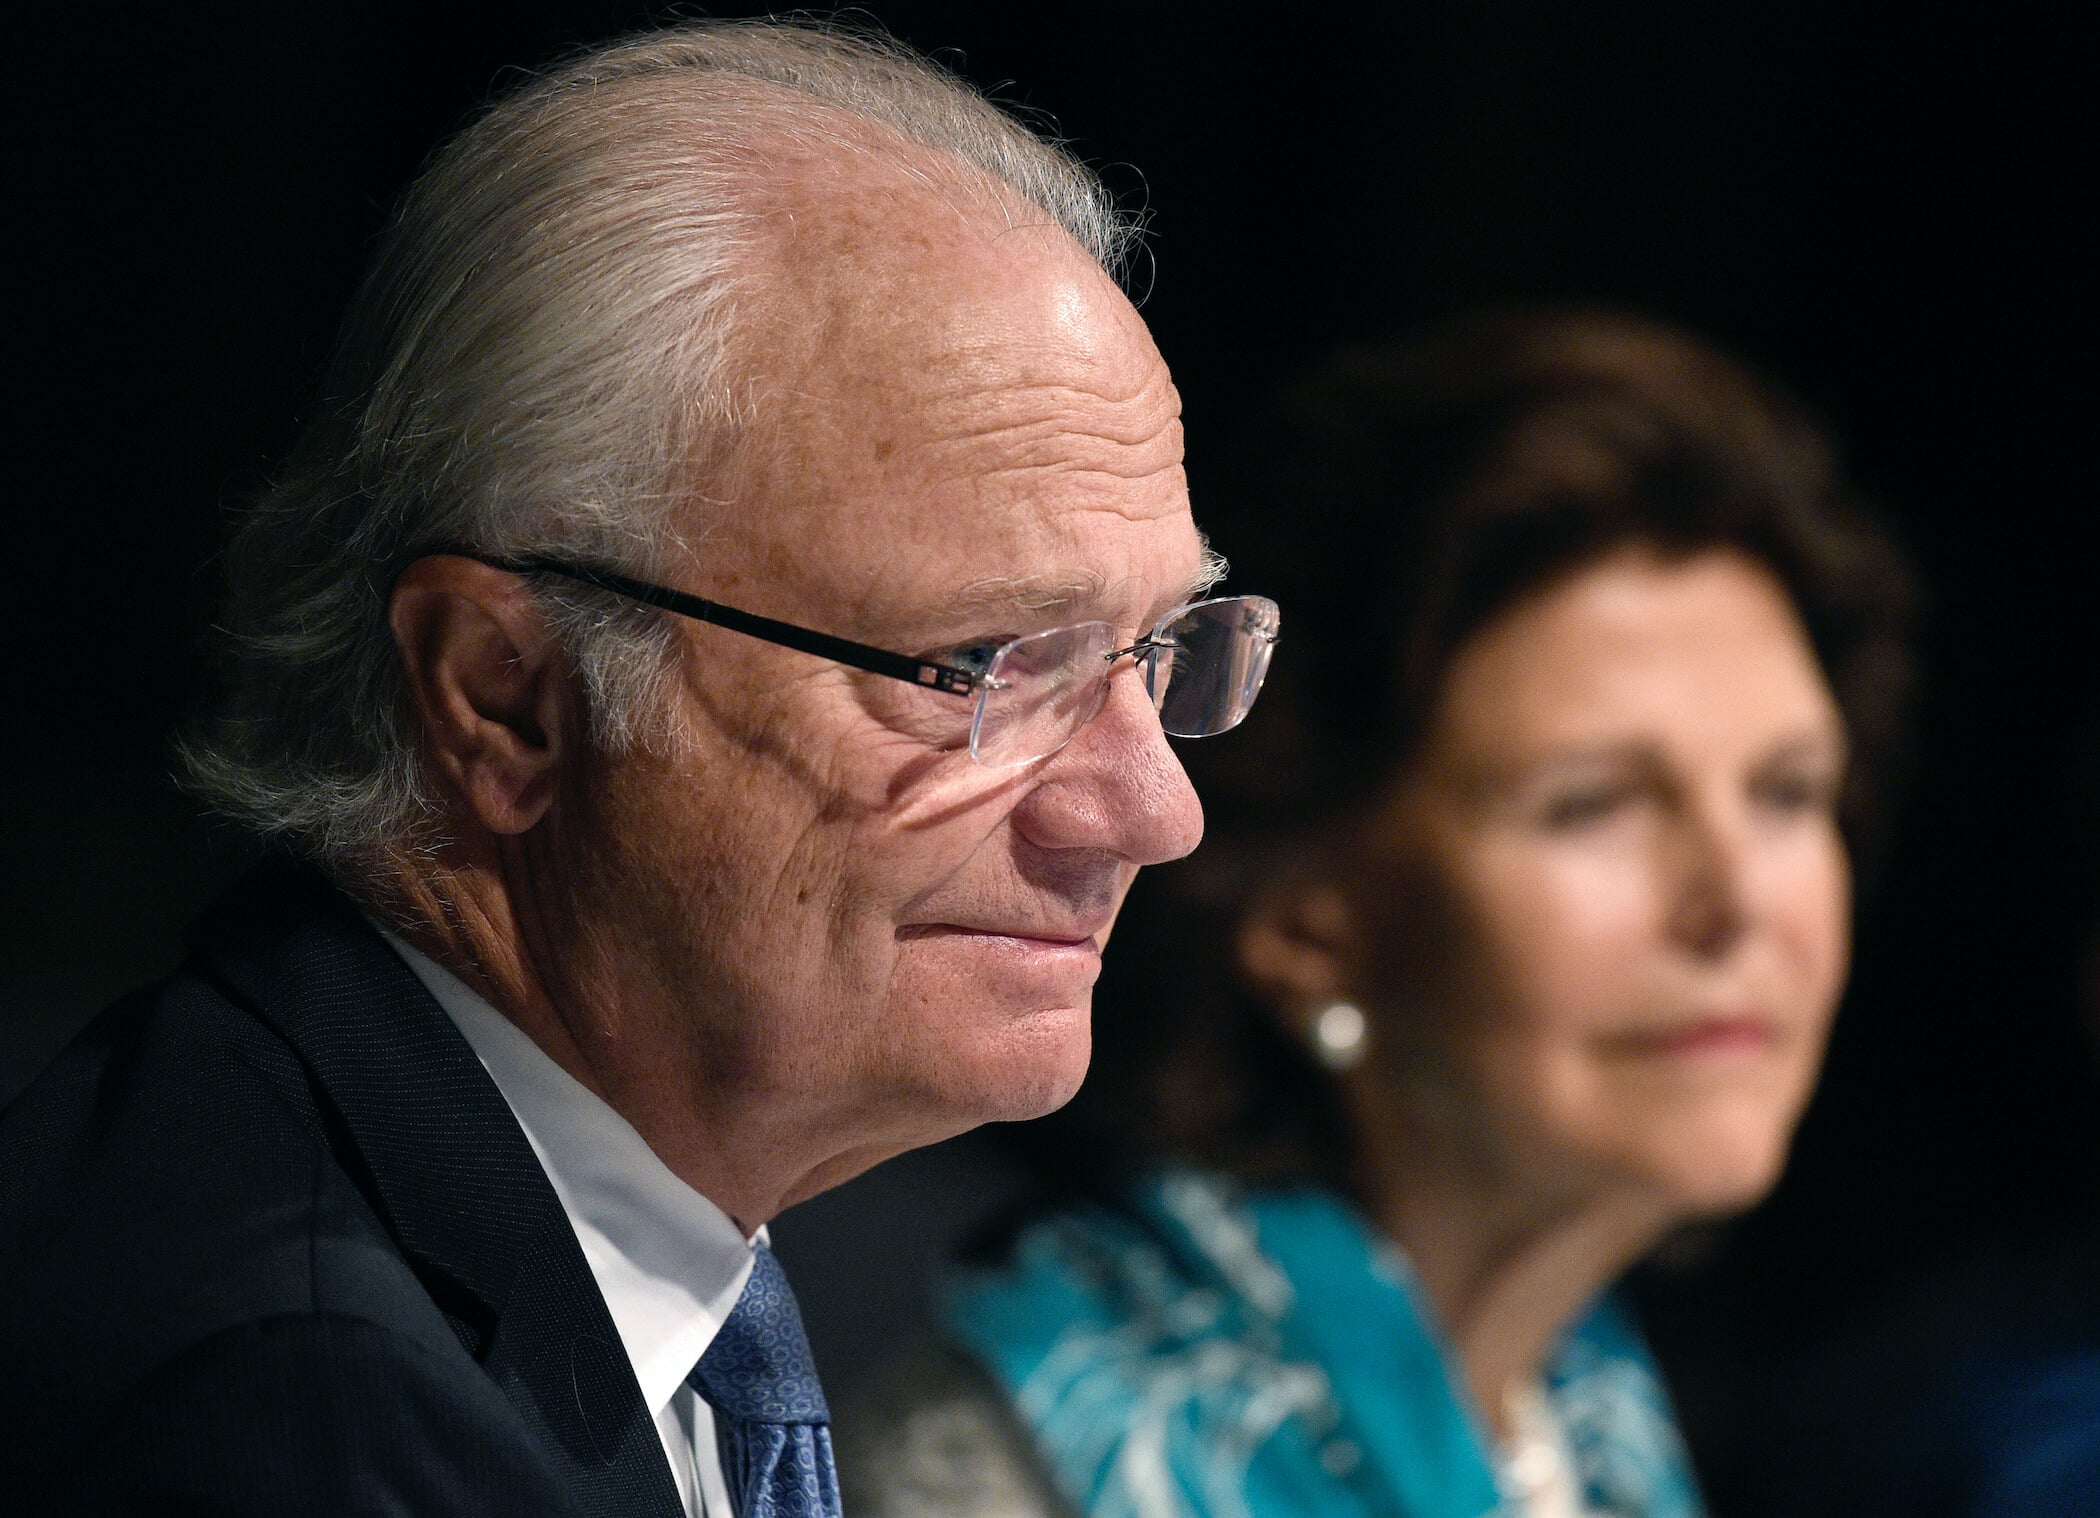 König Carl Gustaf: Böse Anschuldigungen